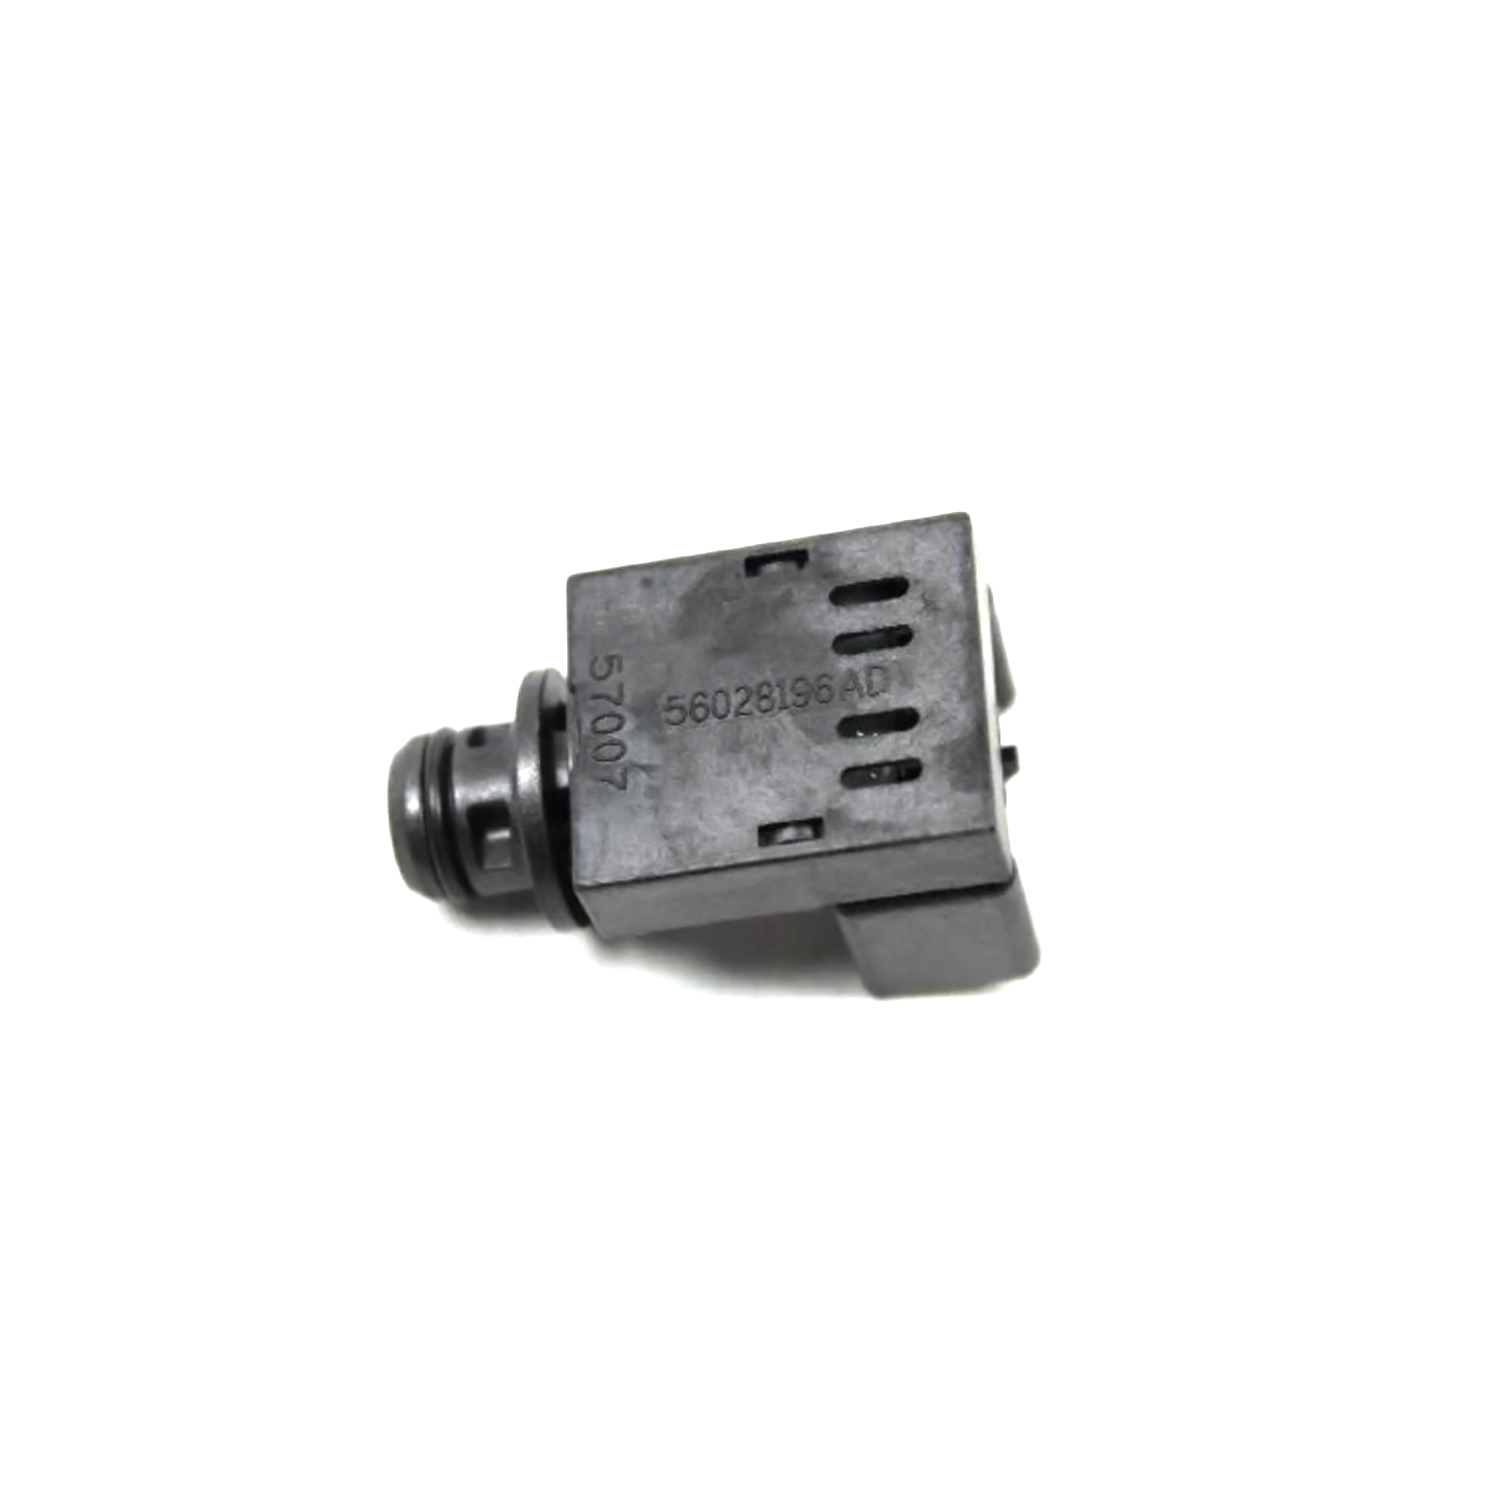 MOPAR BRAND - Auto Trans Pressure Sensor Transducer - MPB 56028196AD